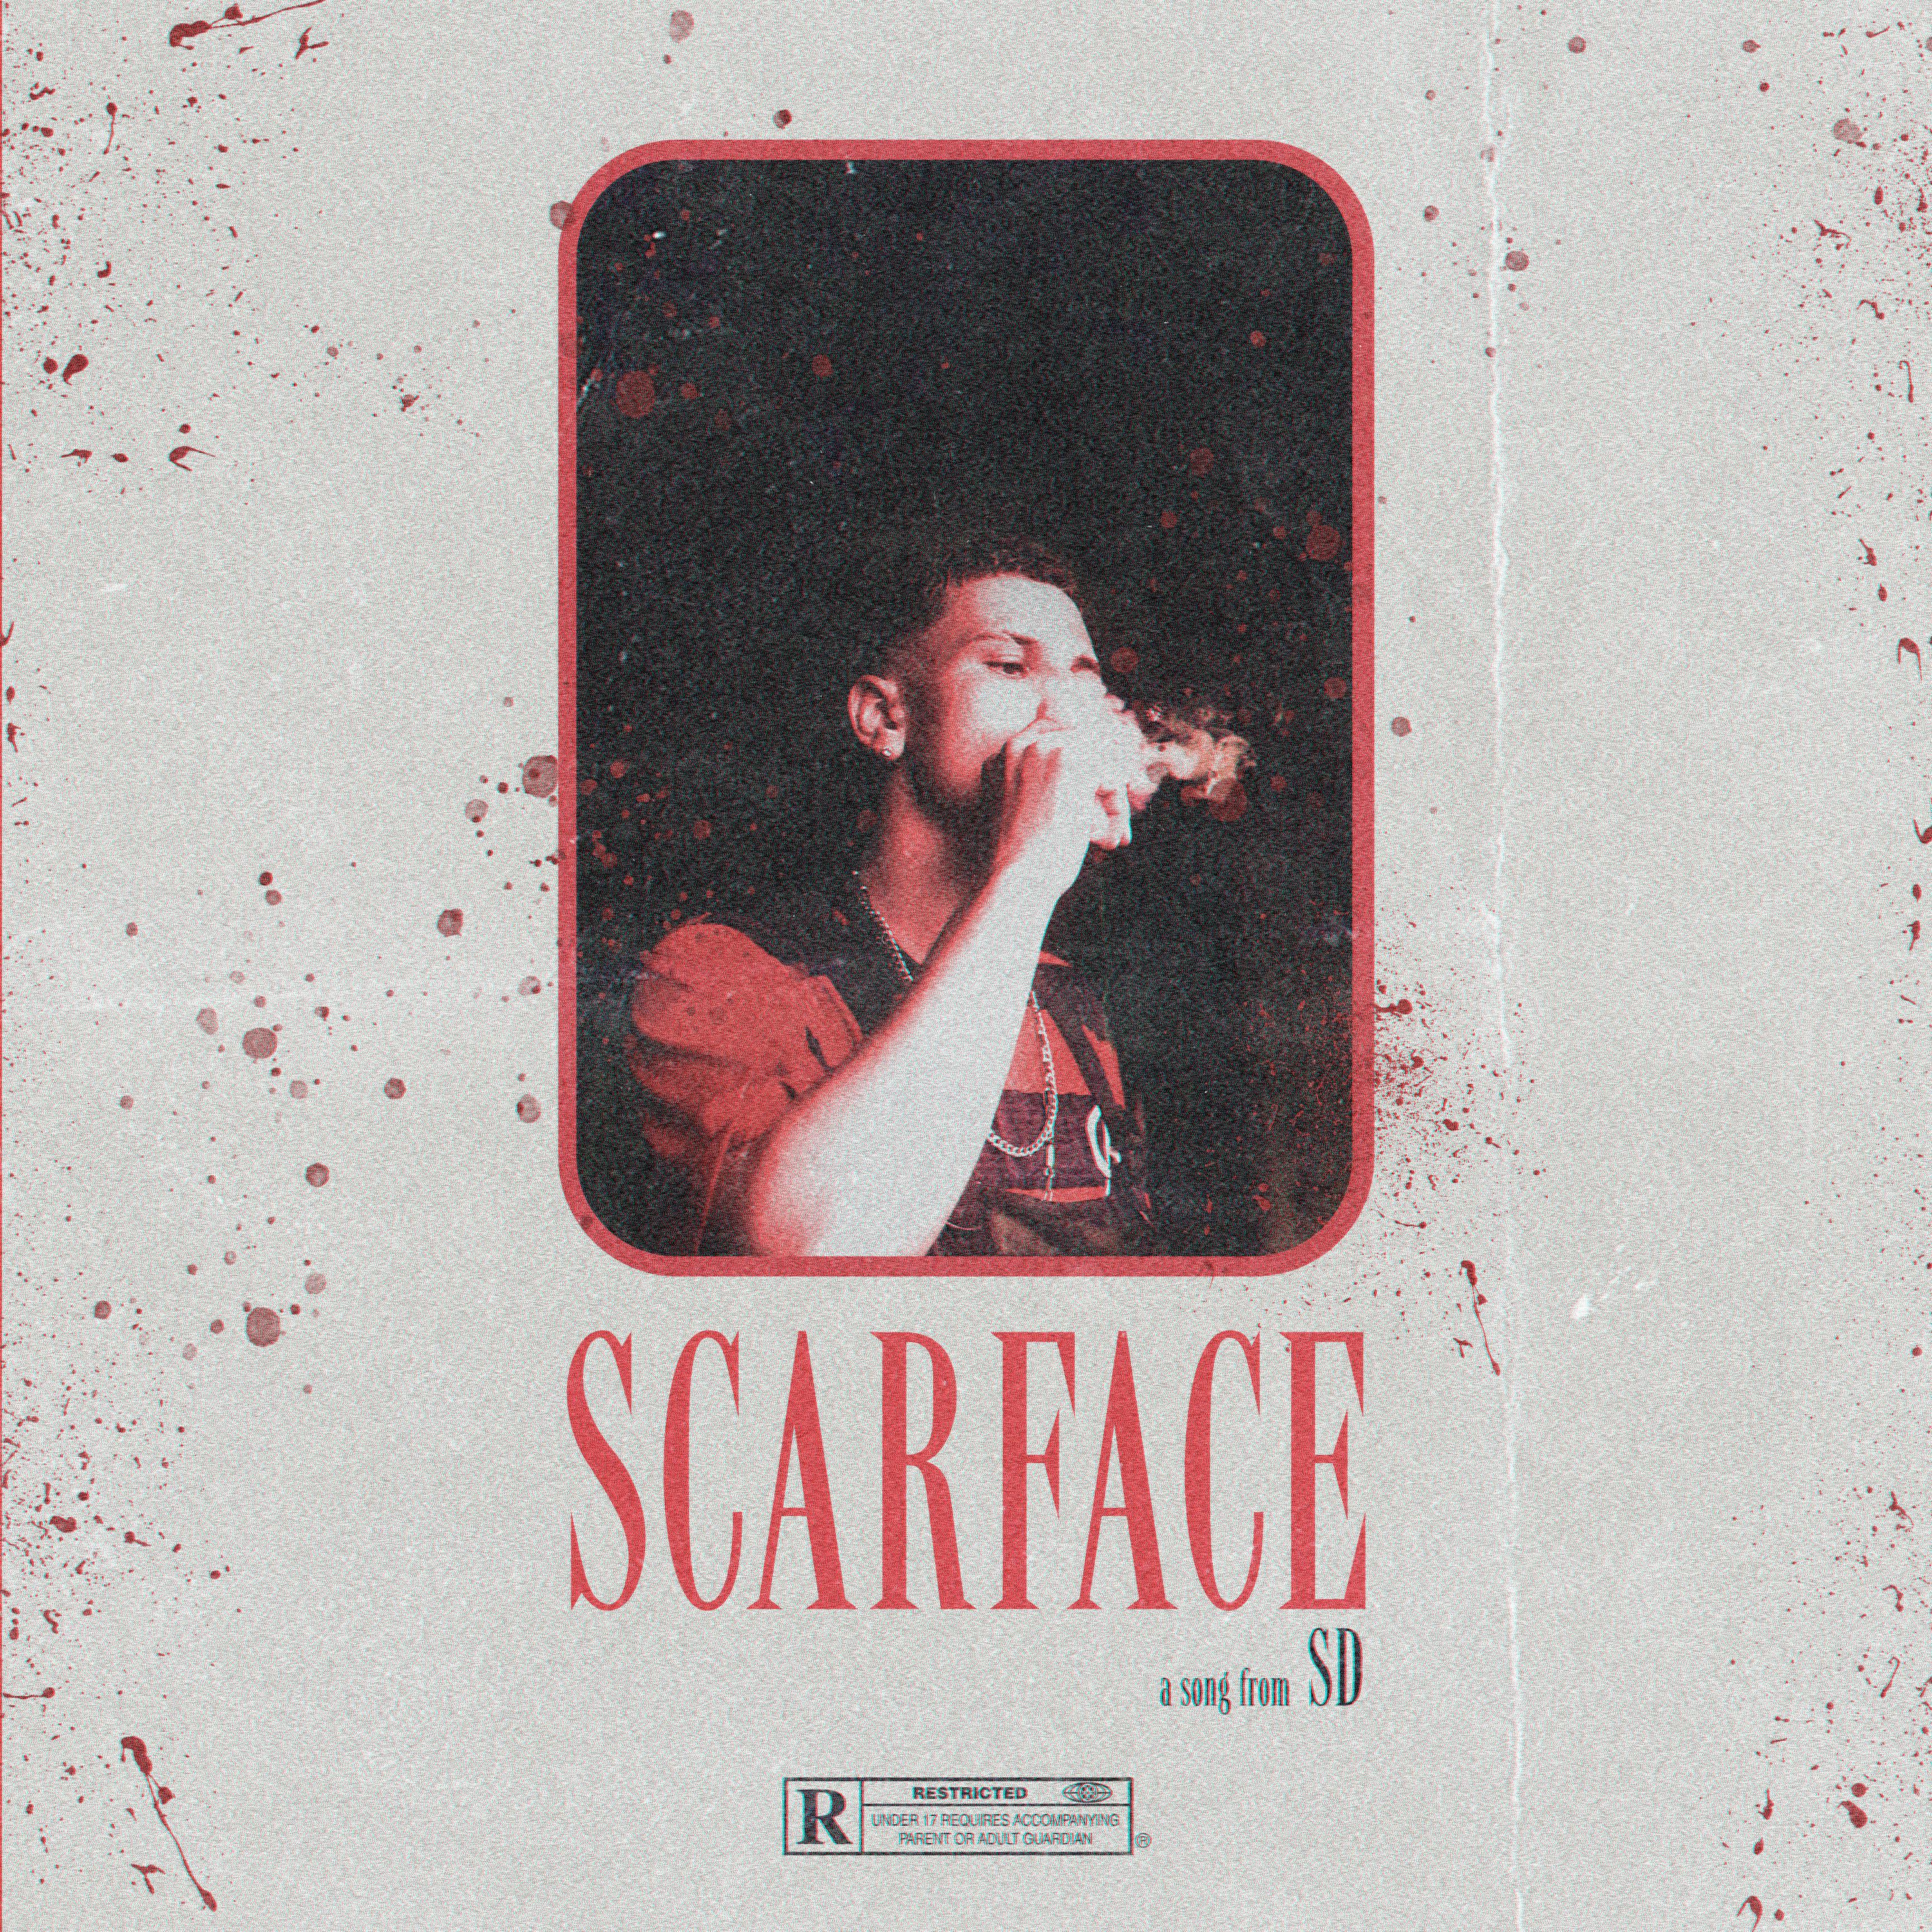 SD - Scarface